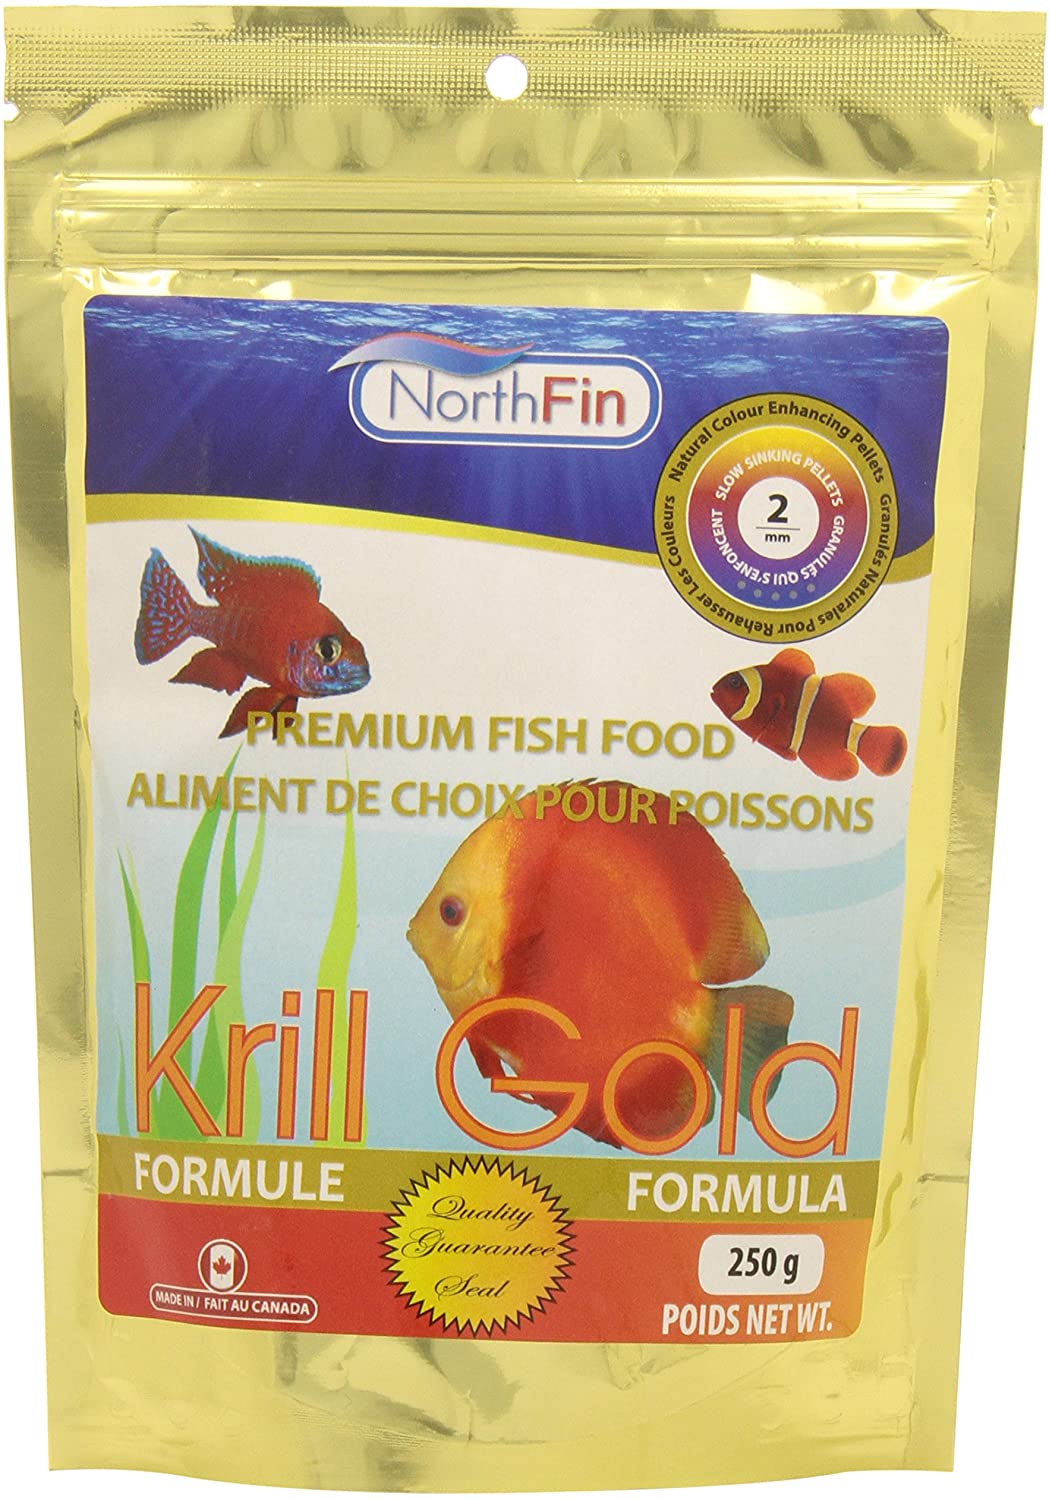 NorthFin Krill Gold 3mm